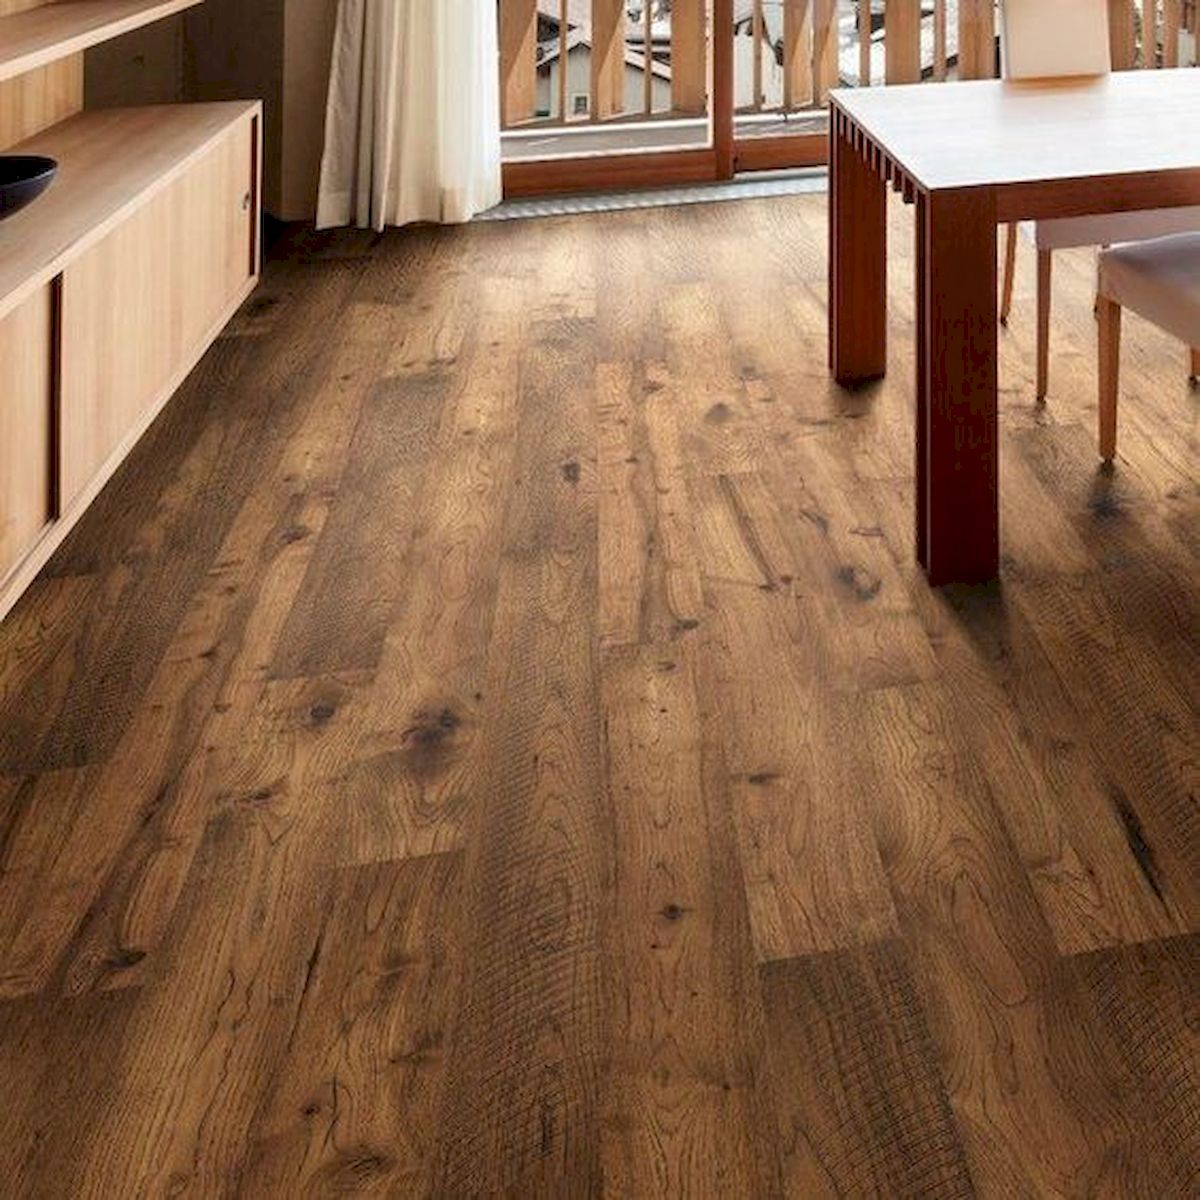 80 Gorgeous Hardwood Floor Ideas for Interior Home (16)